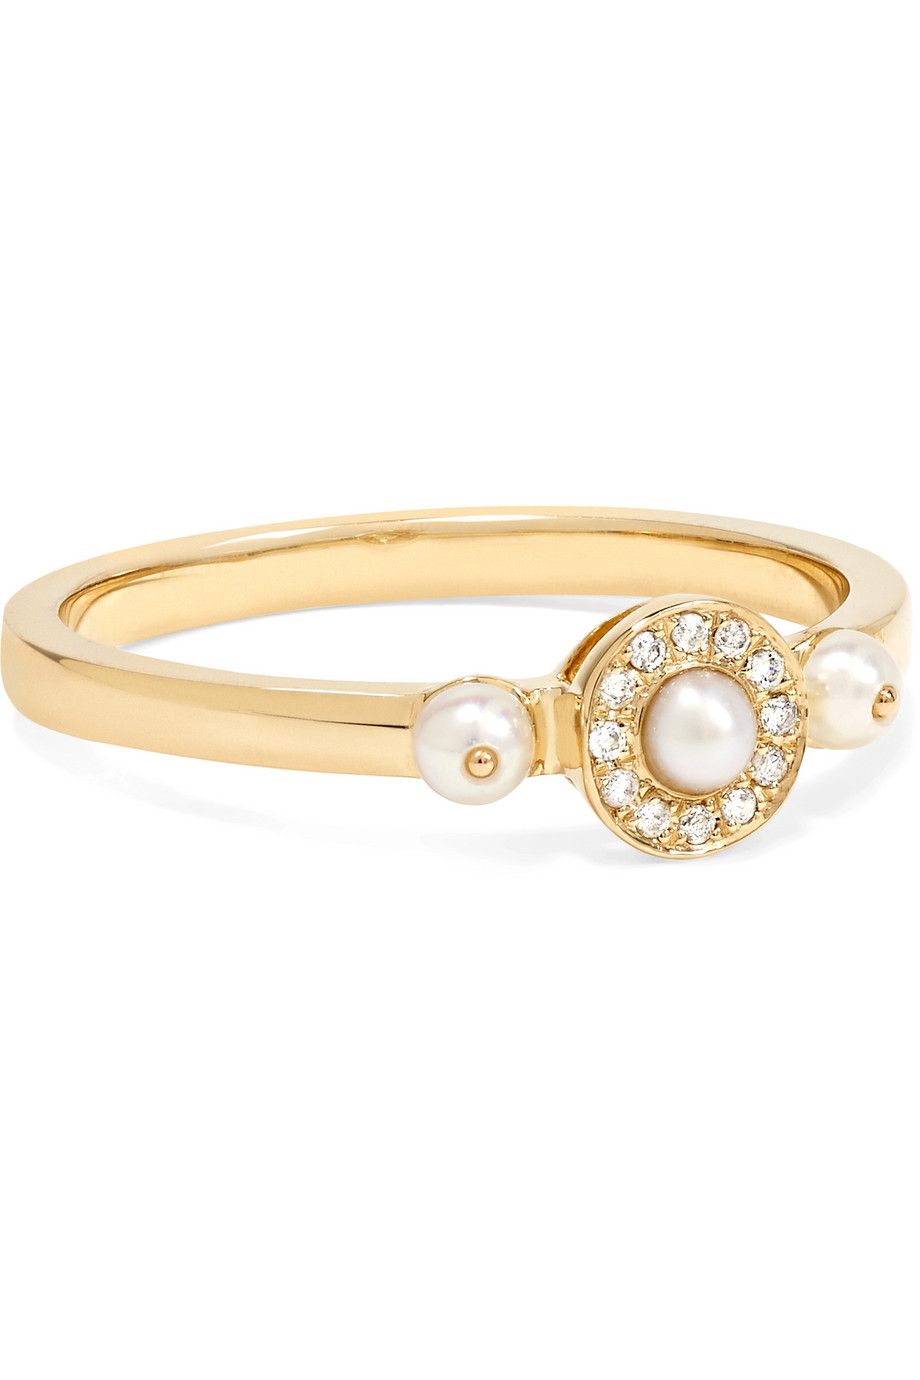 14-karat gold, pearl and diamond ring